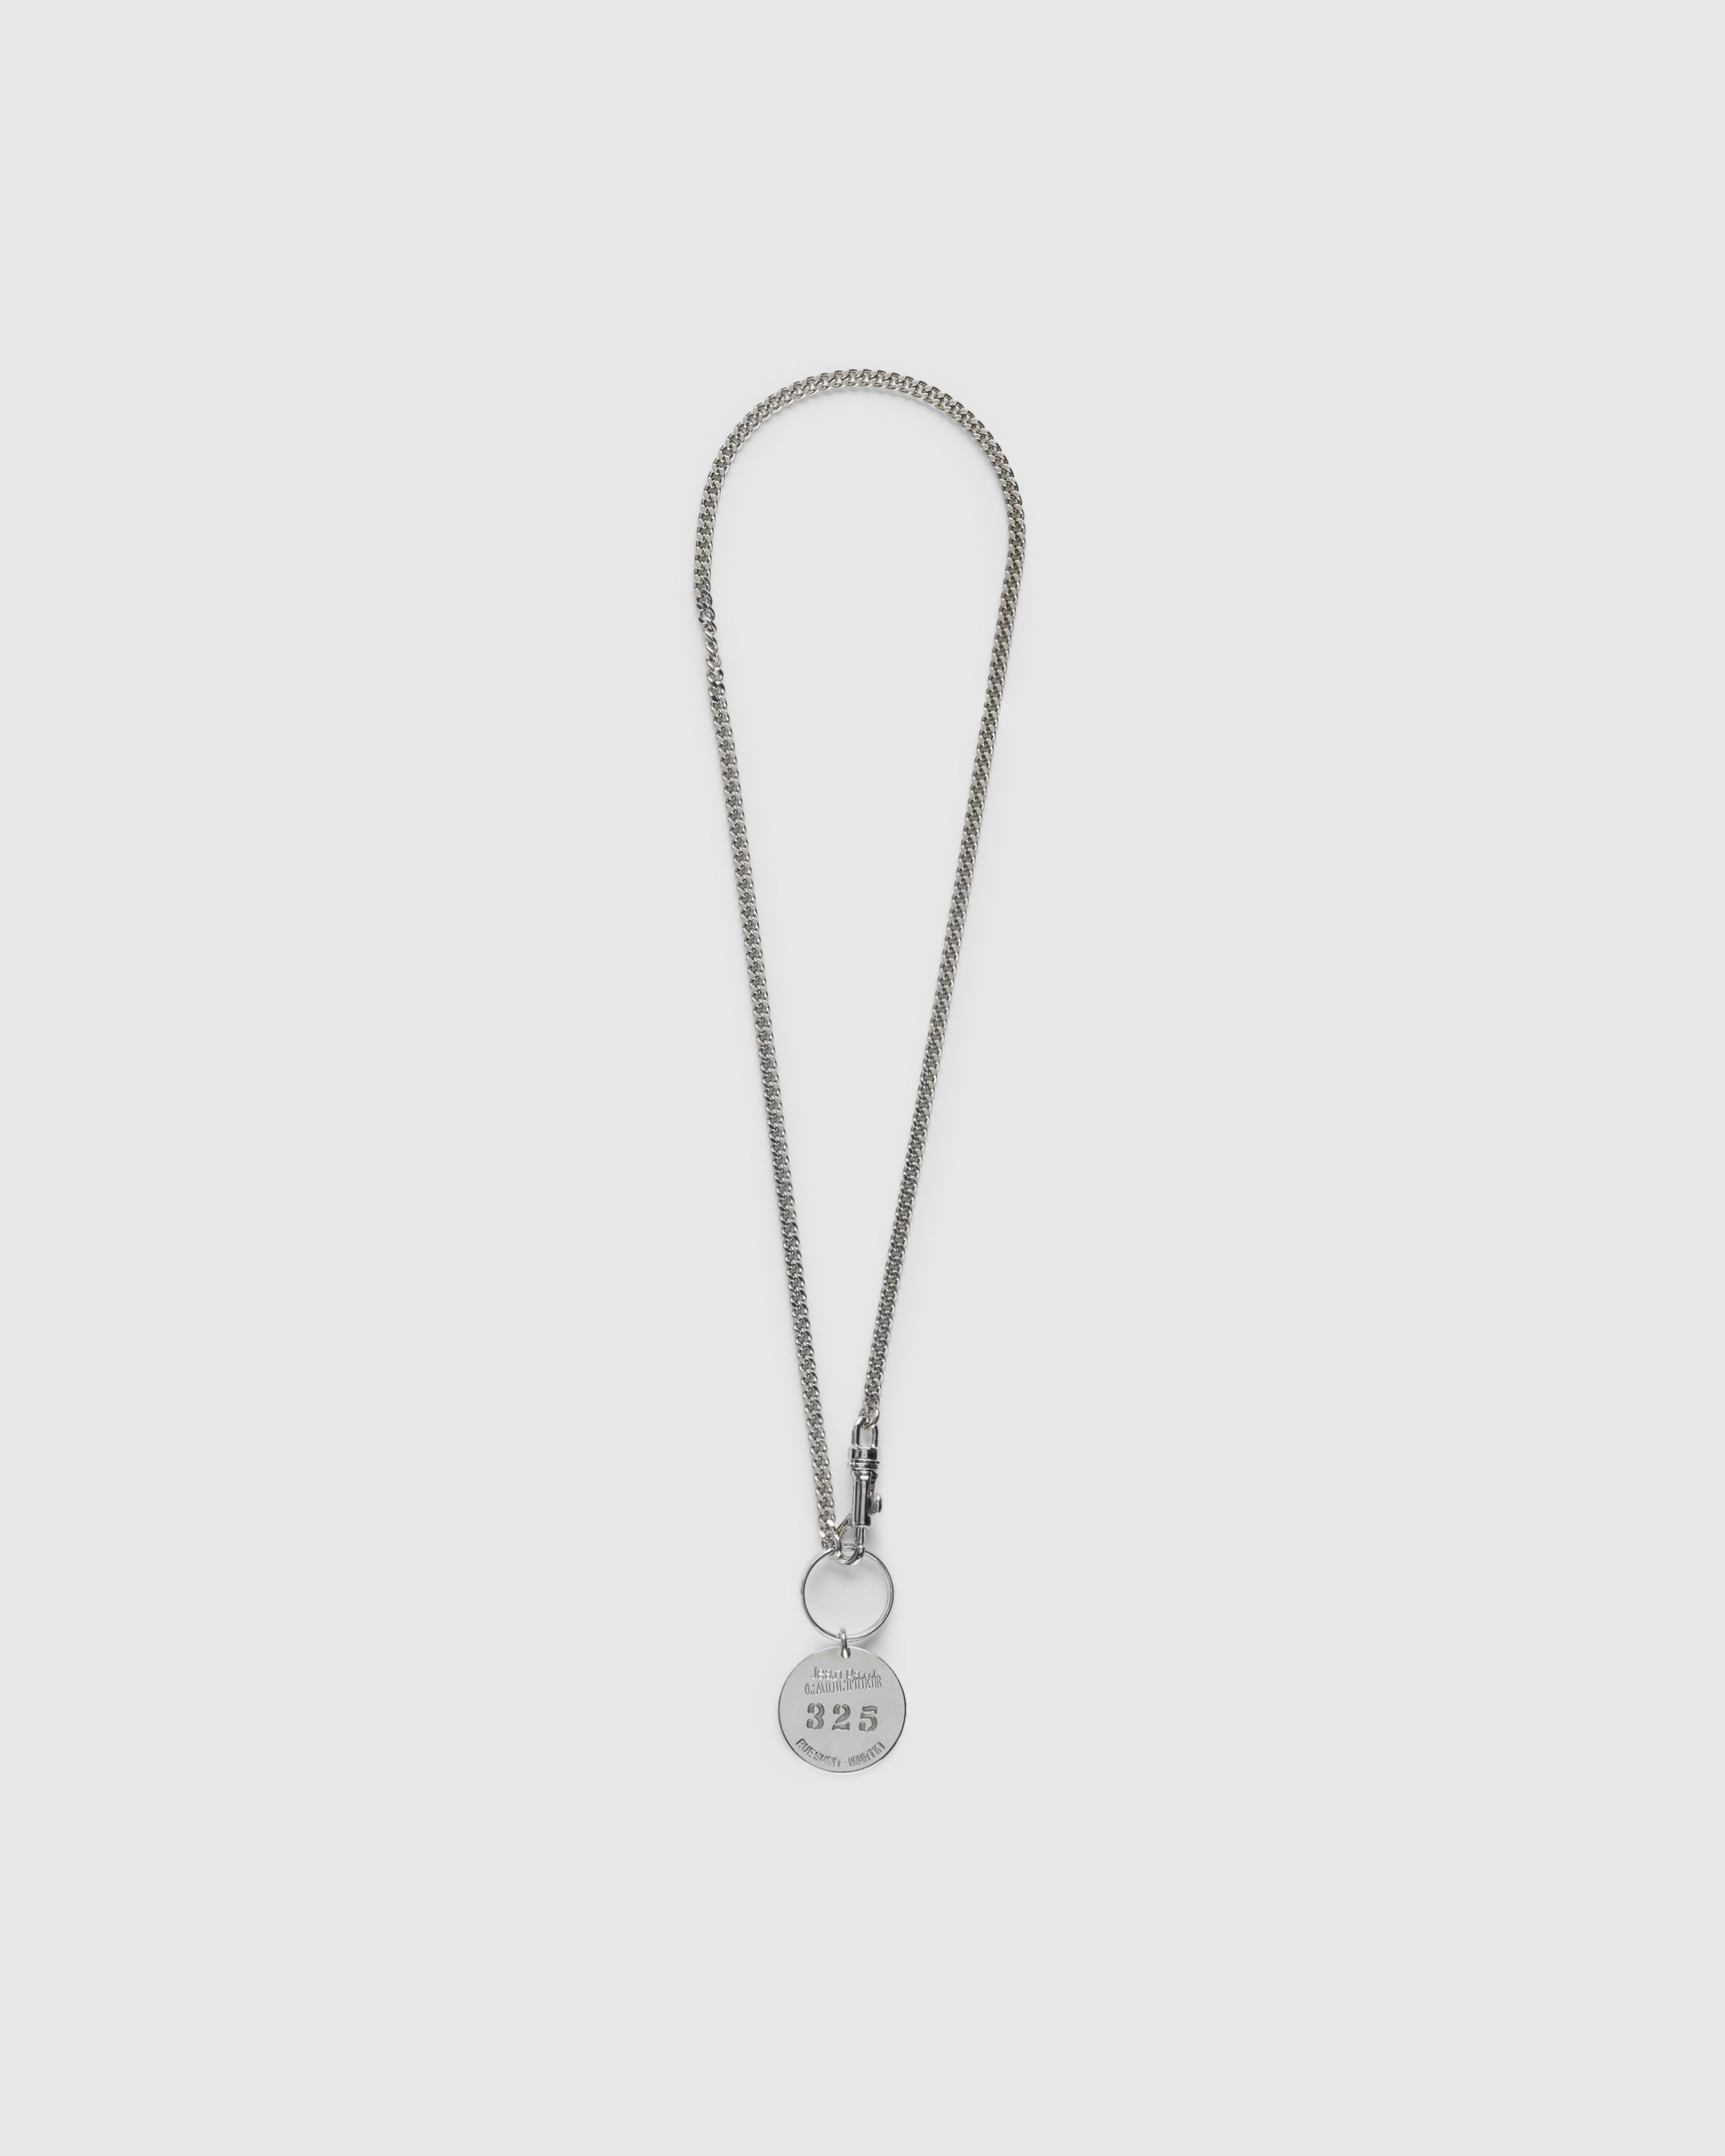 Jean Paul Gaultier – 325 Necklace Silver | Highsnobiety Shop